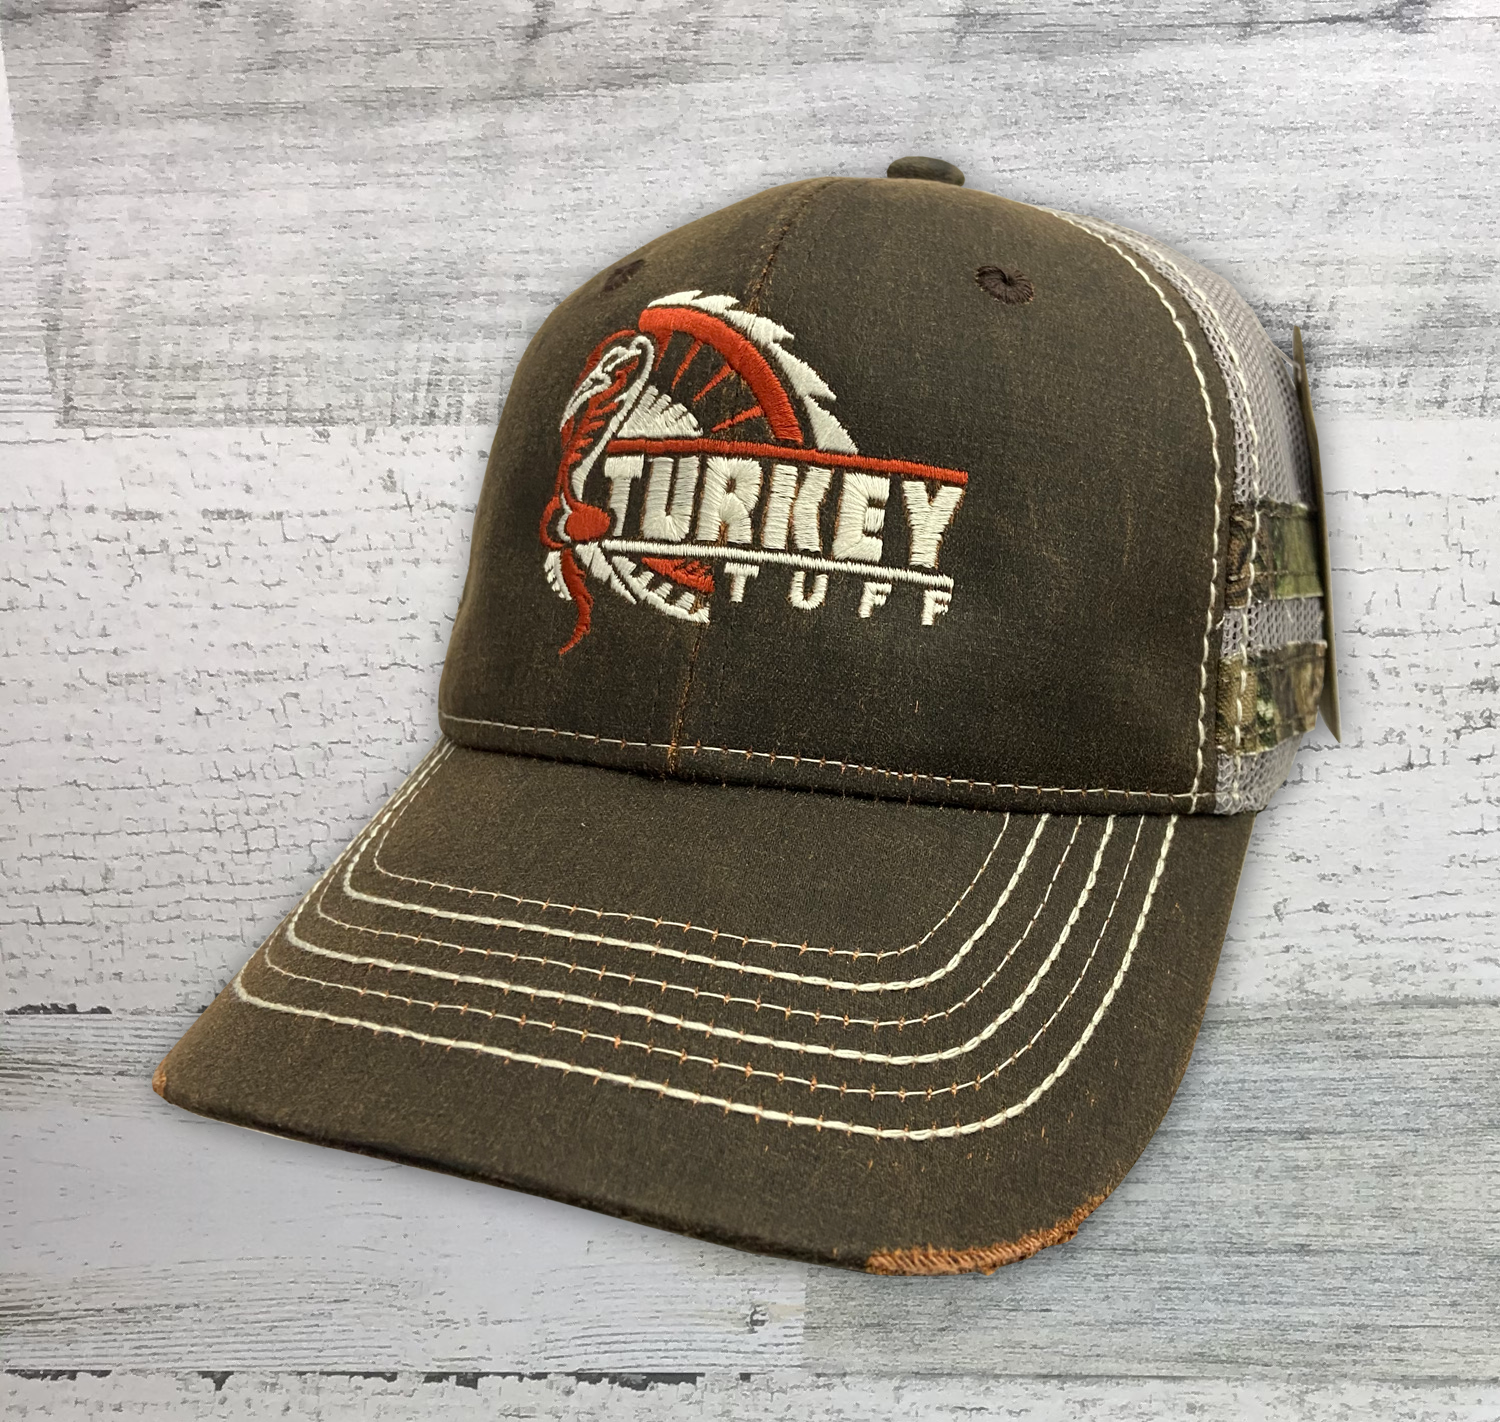 Turkey Tuff - Turkey Hat - Mossy Oak Frayed Camo Stripes Mesh-Back Cap